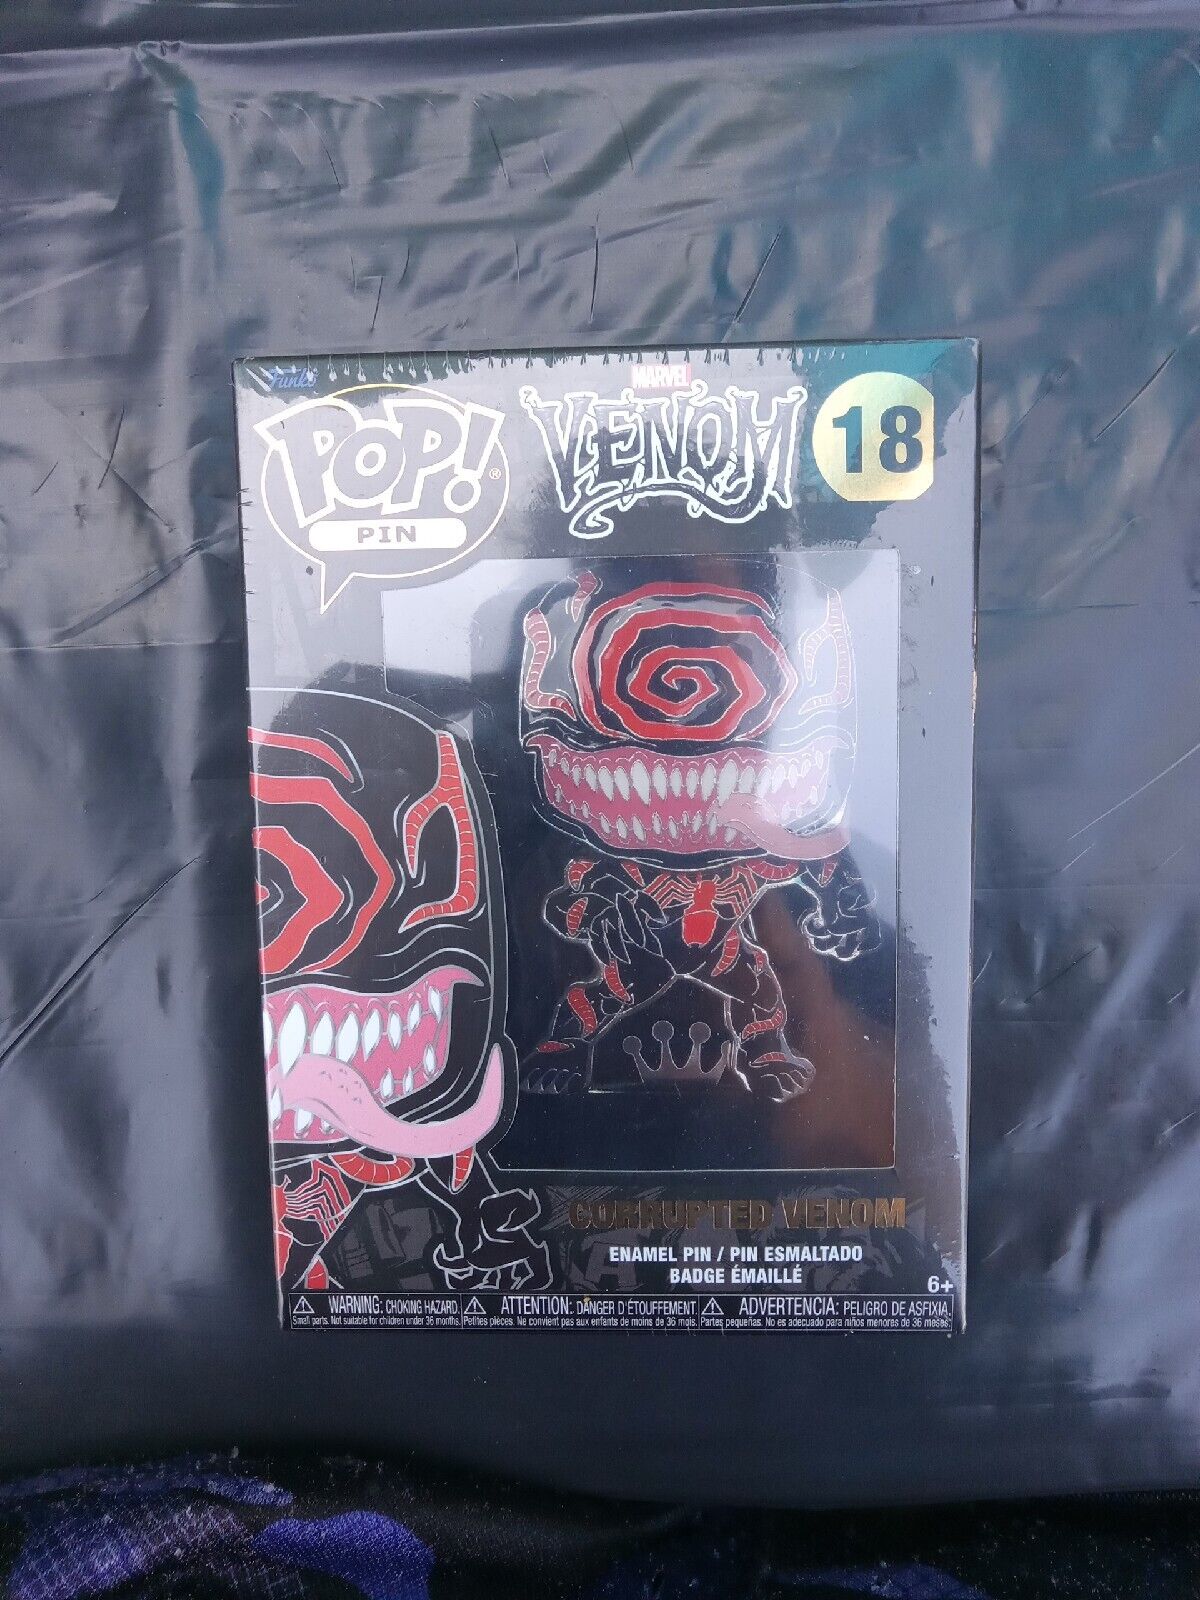 FUNKO POP PIN Marvel - Corrupted Venom Enamel Pin #18 NEW 4\